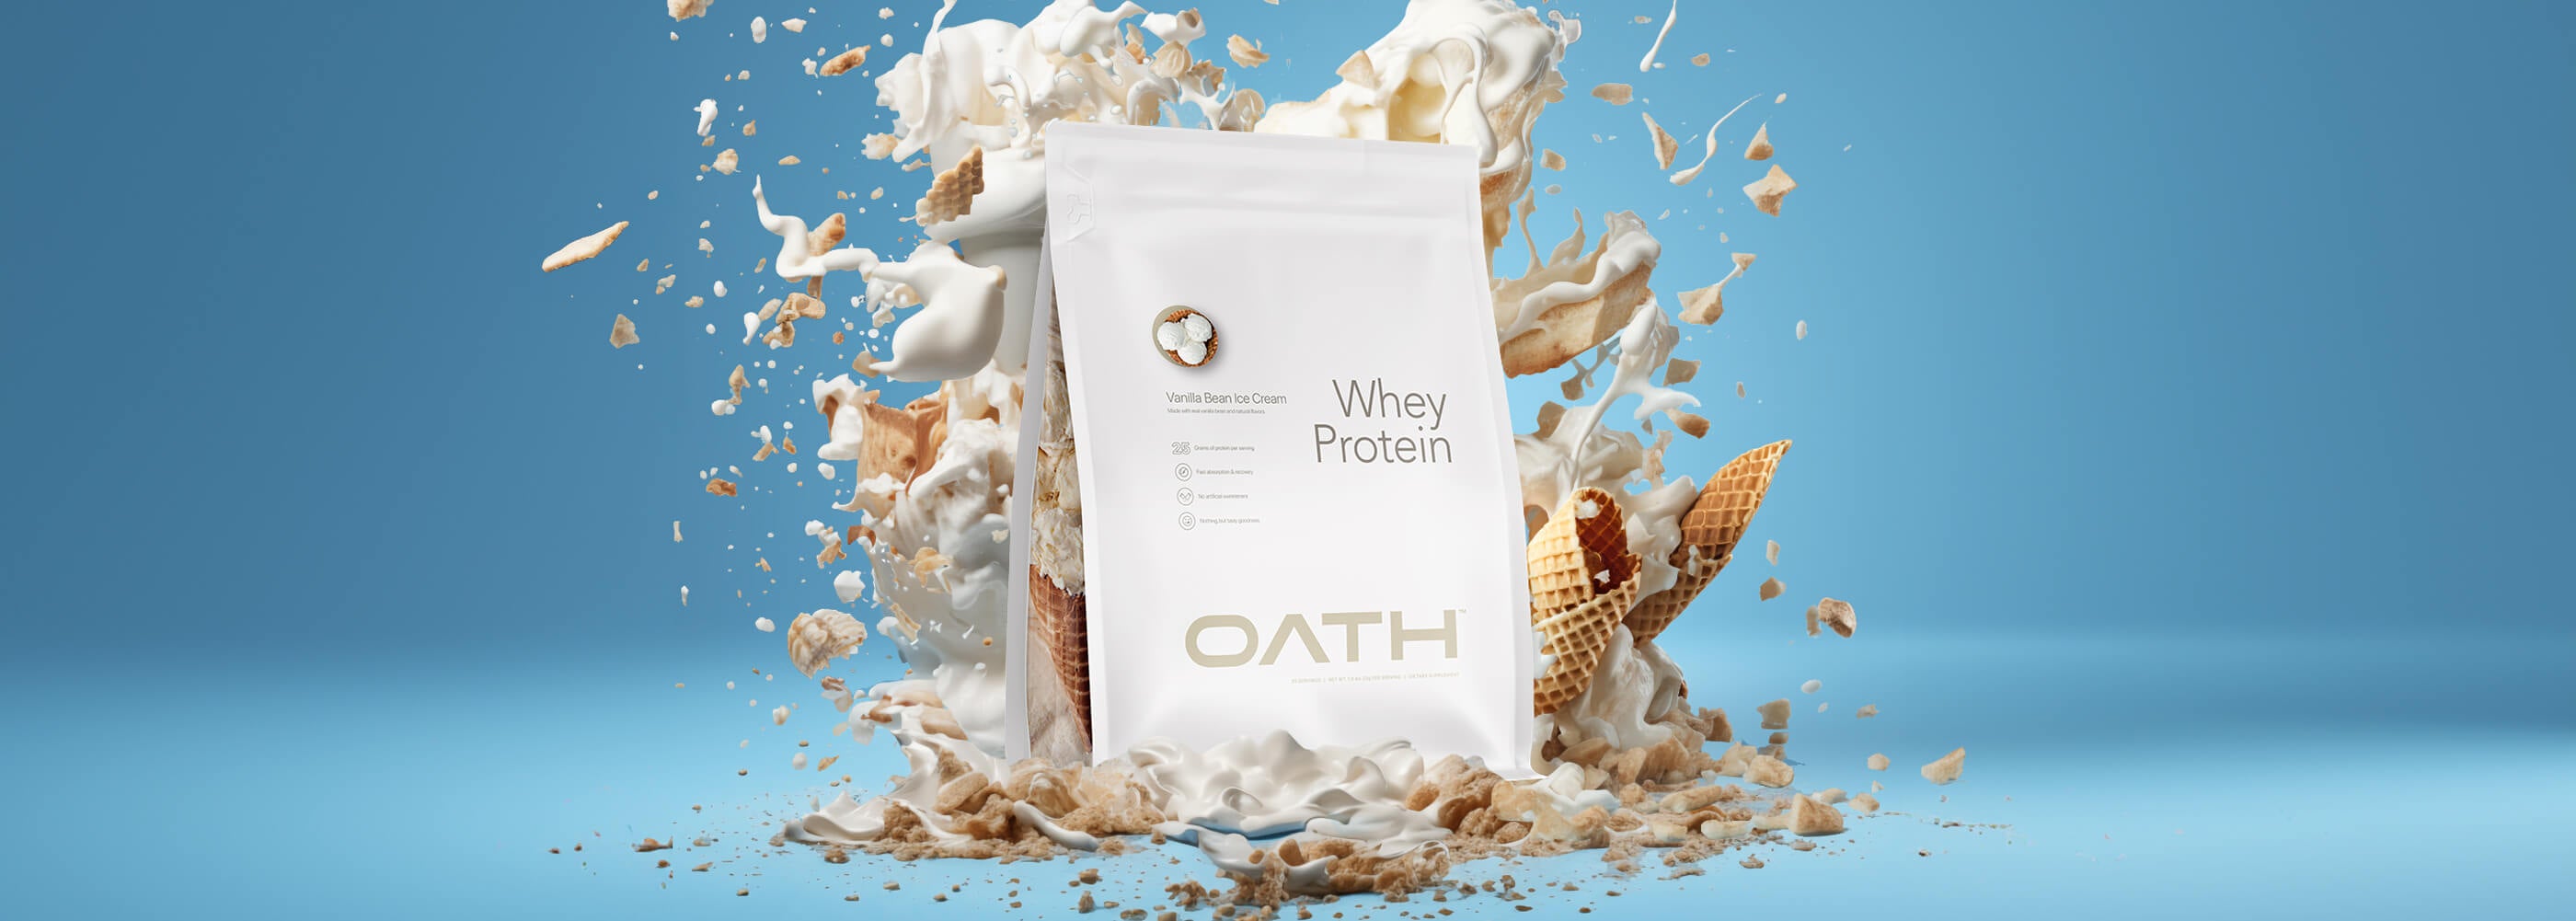 Oath Vanilla Bean whey protein bag with vanilla ice cream and ice cream cones bursting all around the product